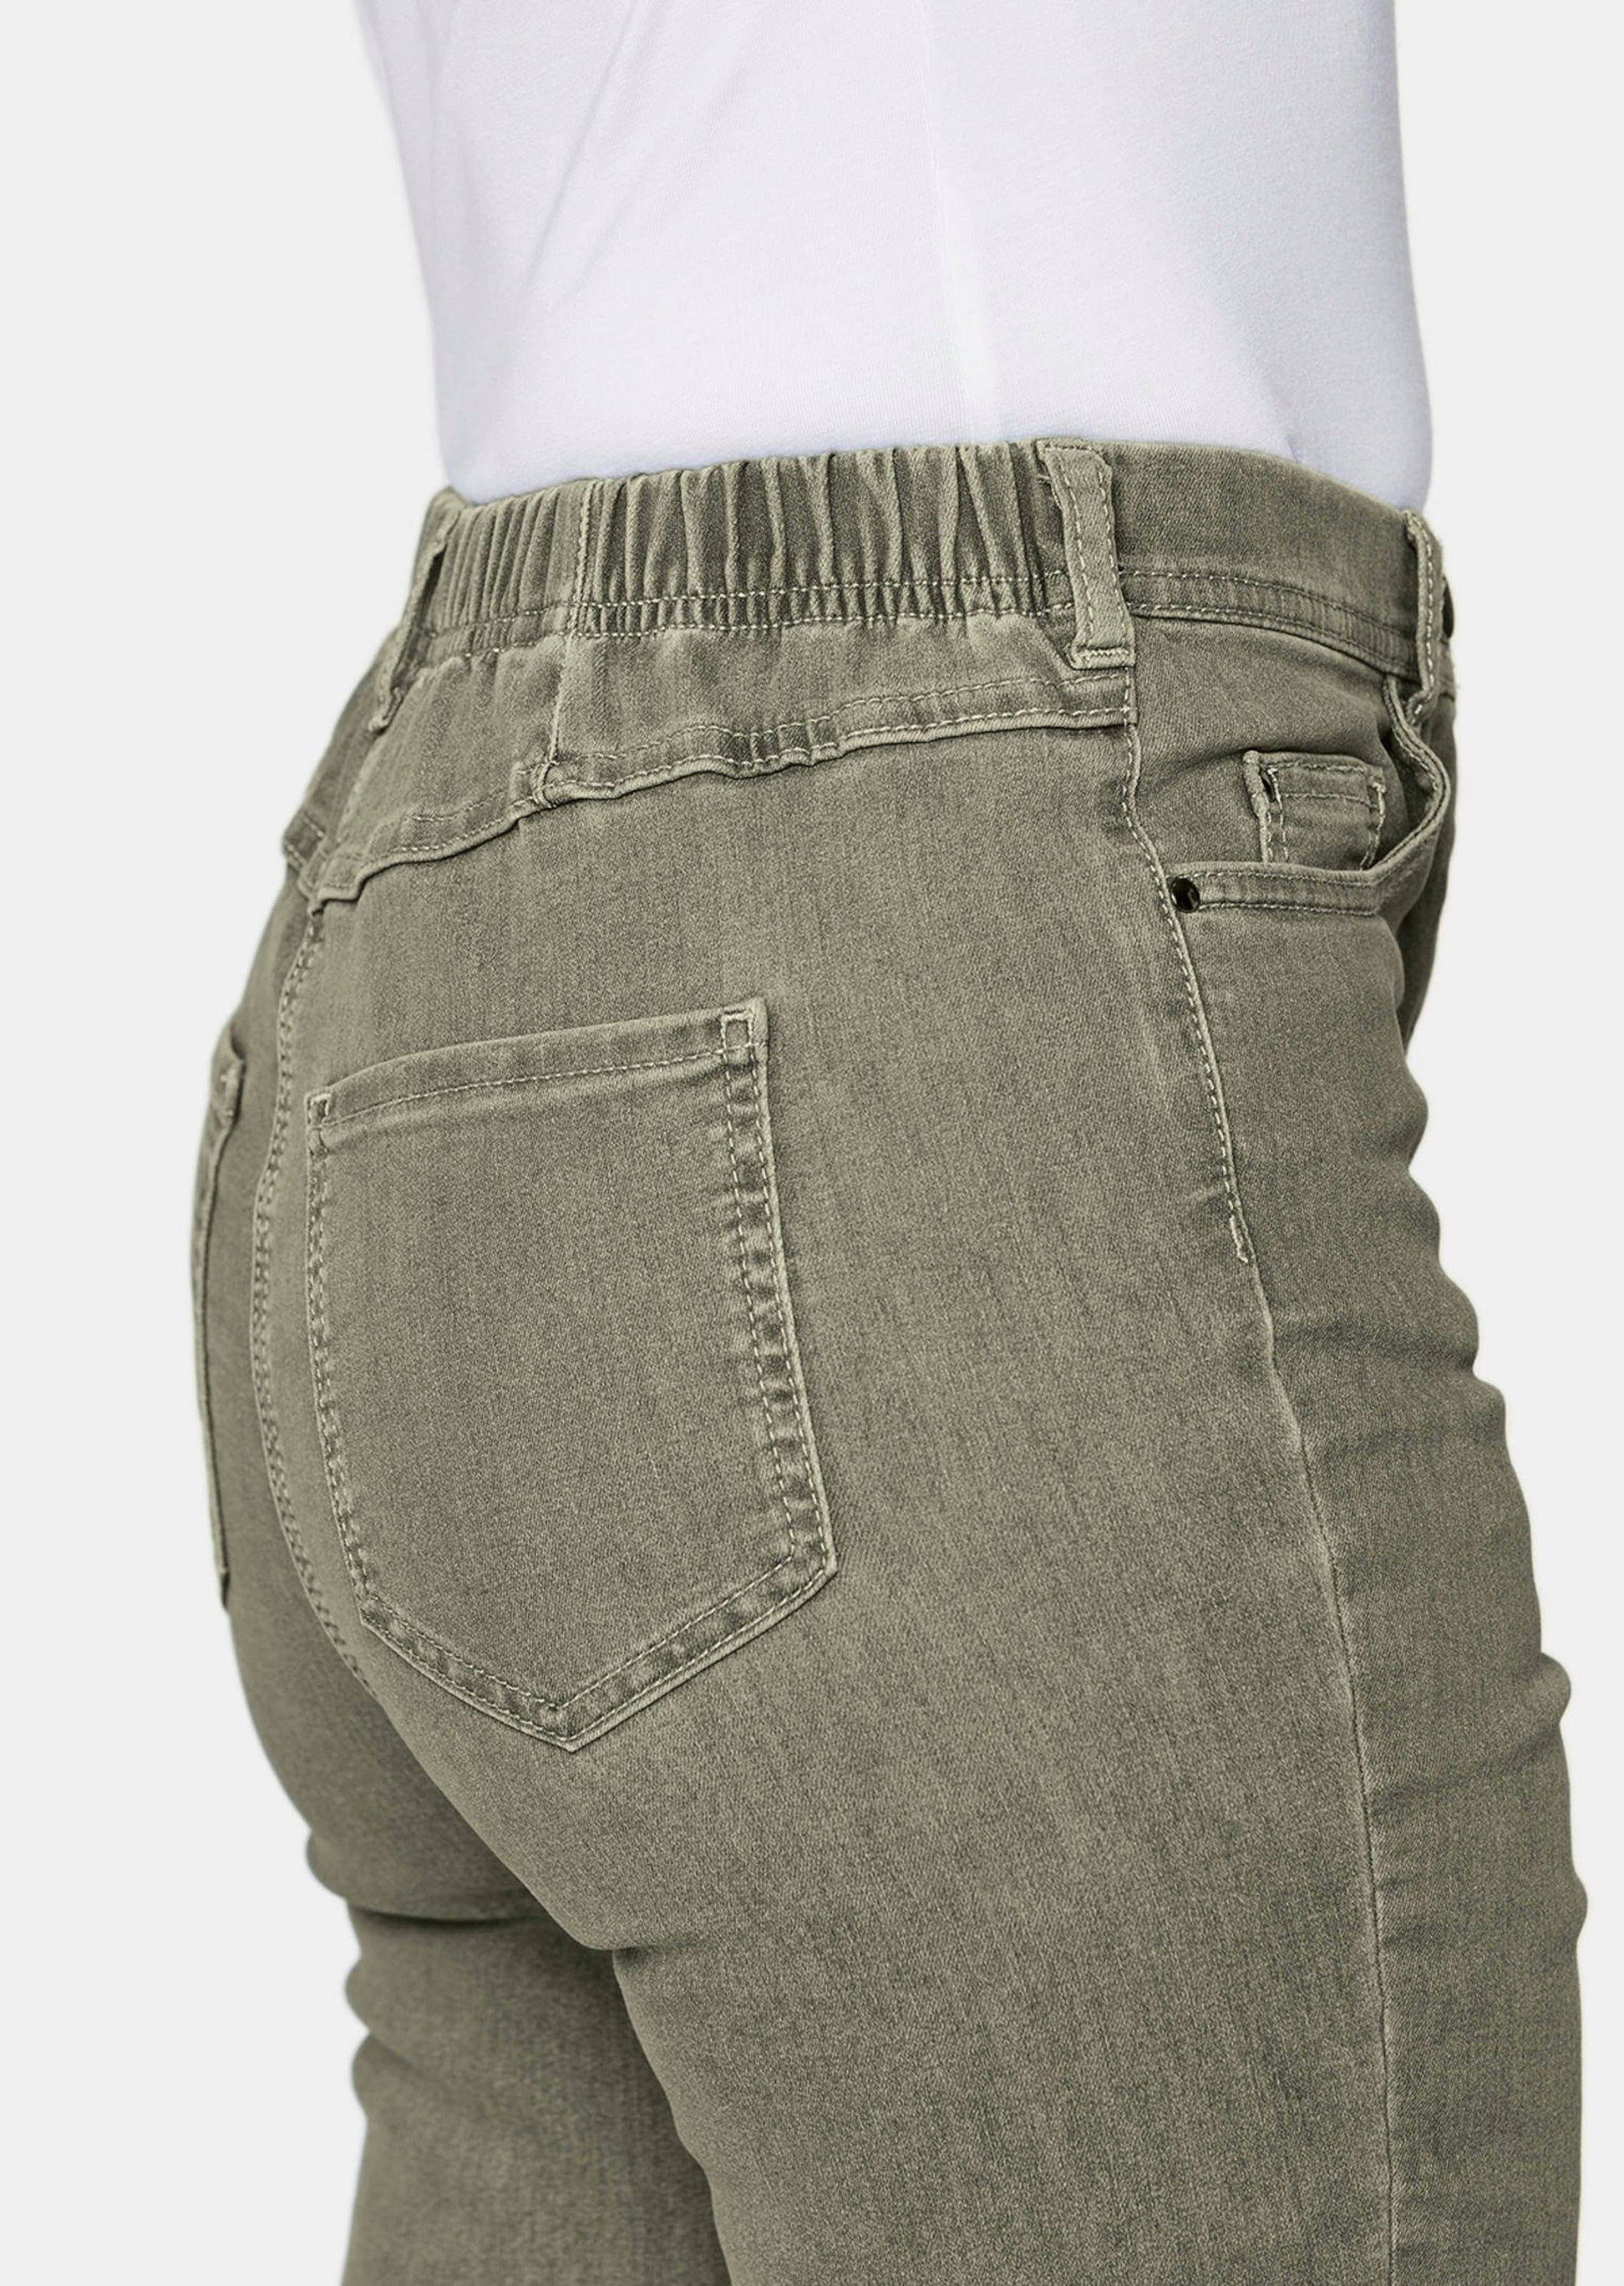 GOLDNER moorgrün Bequeme High-Stretch-Jeanshose Bequeme Jeans